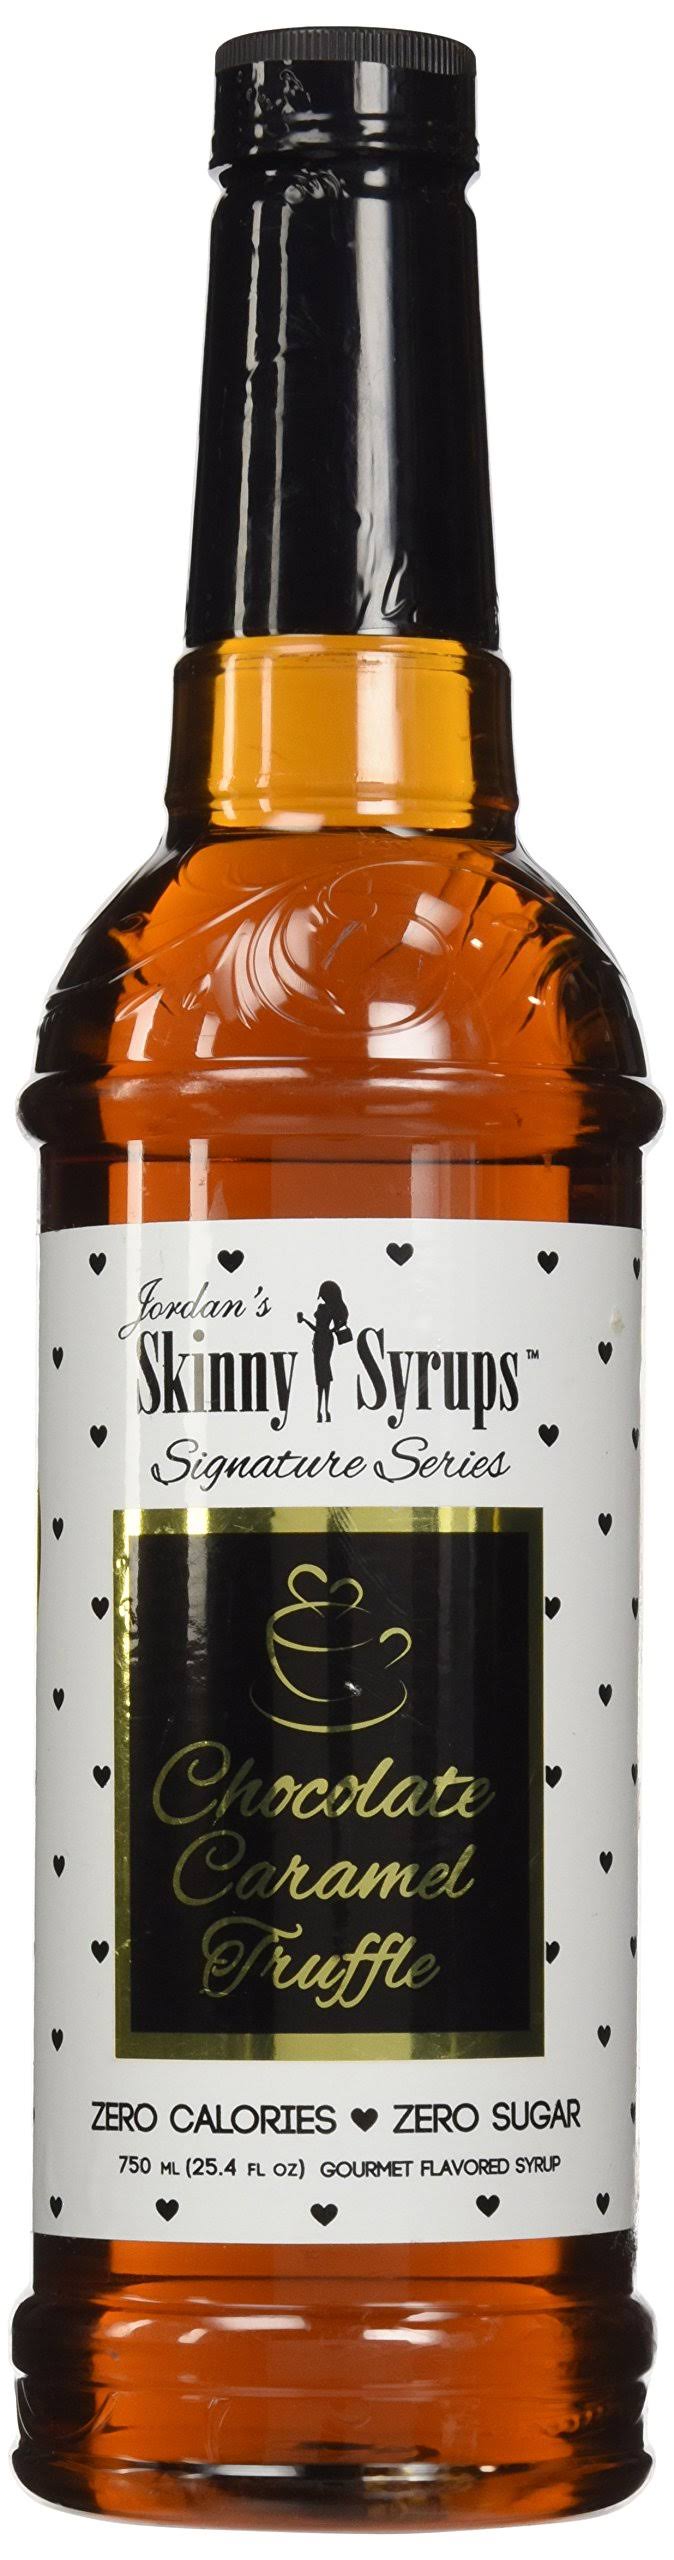 Jordan's Skinny Syrups - Chocolate Caramel Truffle, 25.4oz